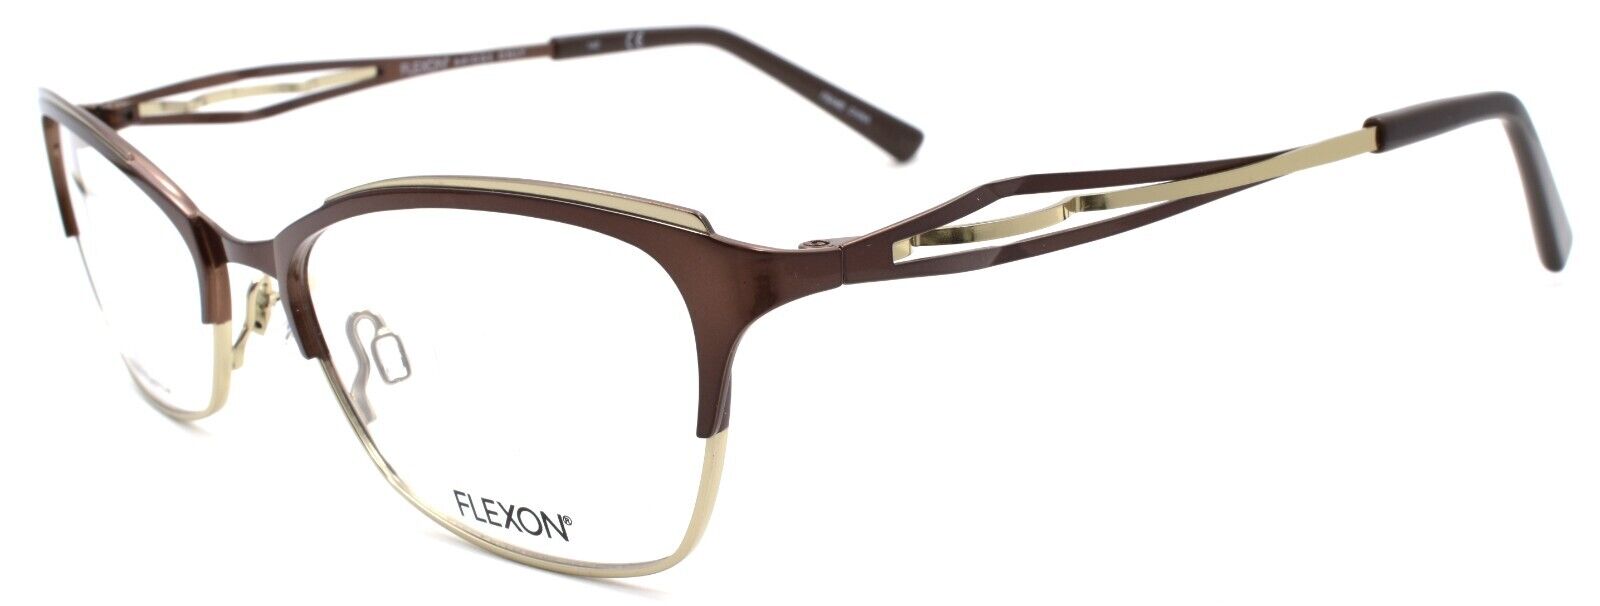 1-Flexon W3000 210 Women's Eyeglasses Frames Brown 53-17-135 Titanium Bridge-883900202862-IKSpecs